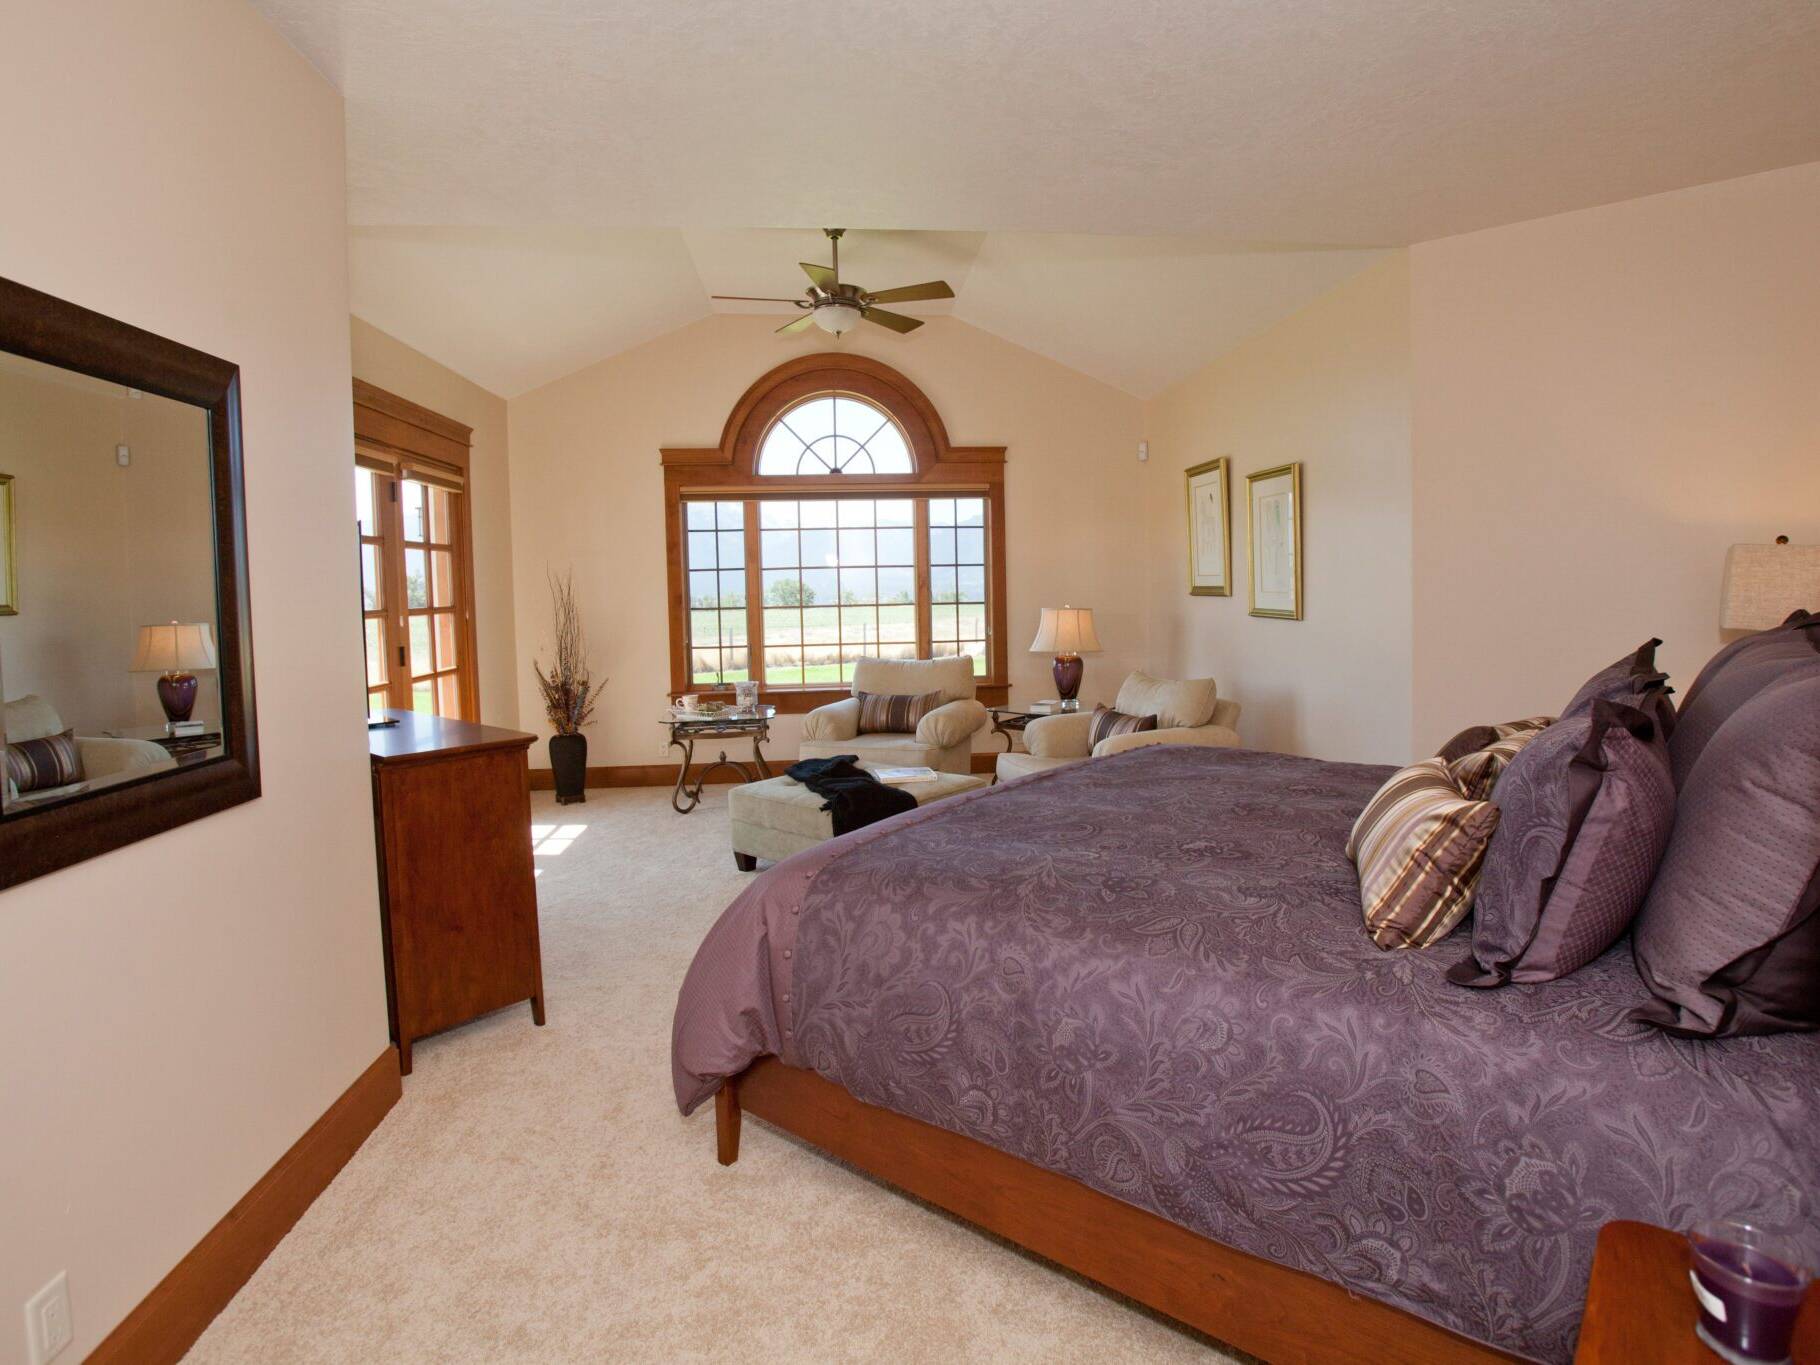 Master bedroom of a custom home built by Big Sky Builders near Hamilton Montana